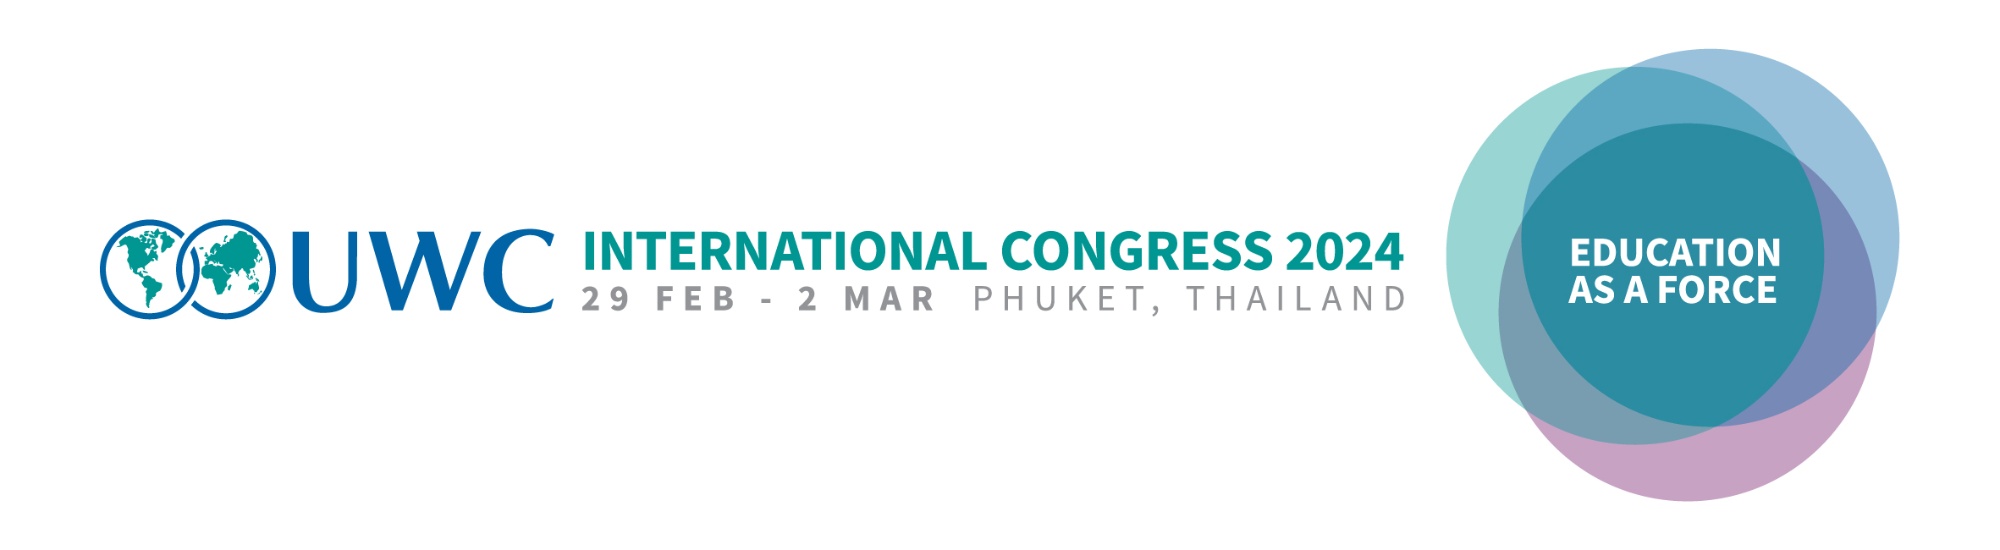 UWC 2024 UWC International Congress